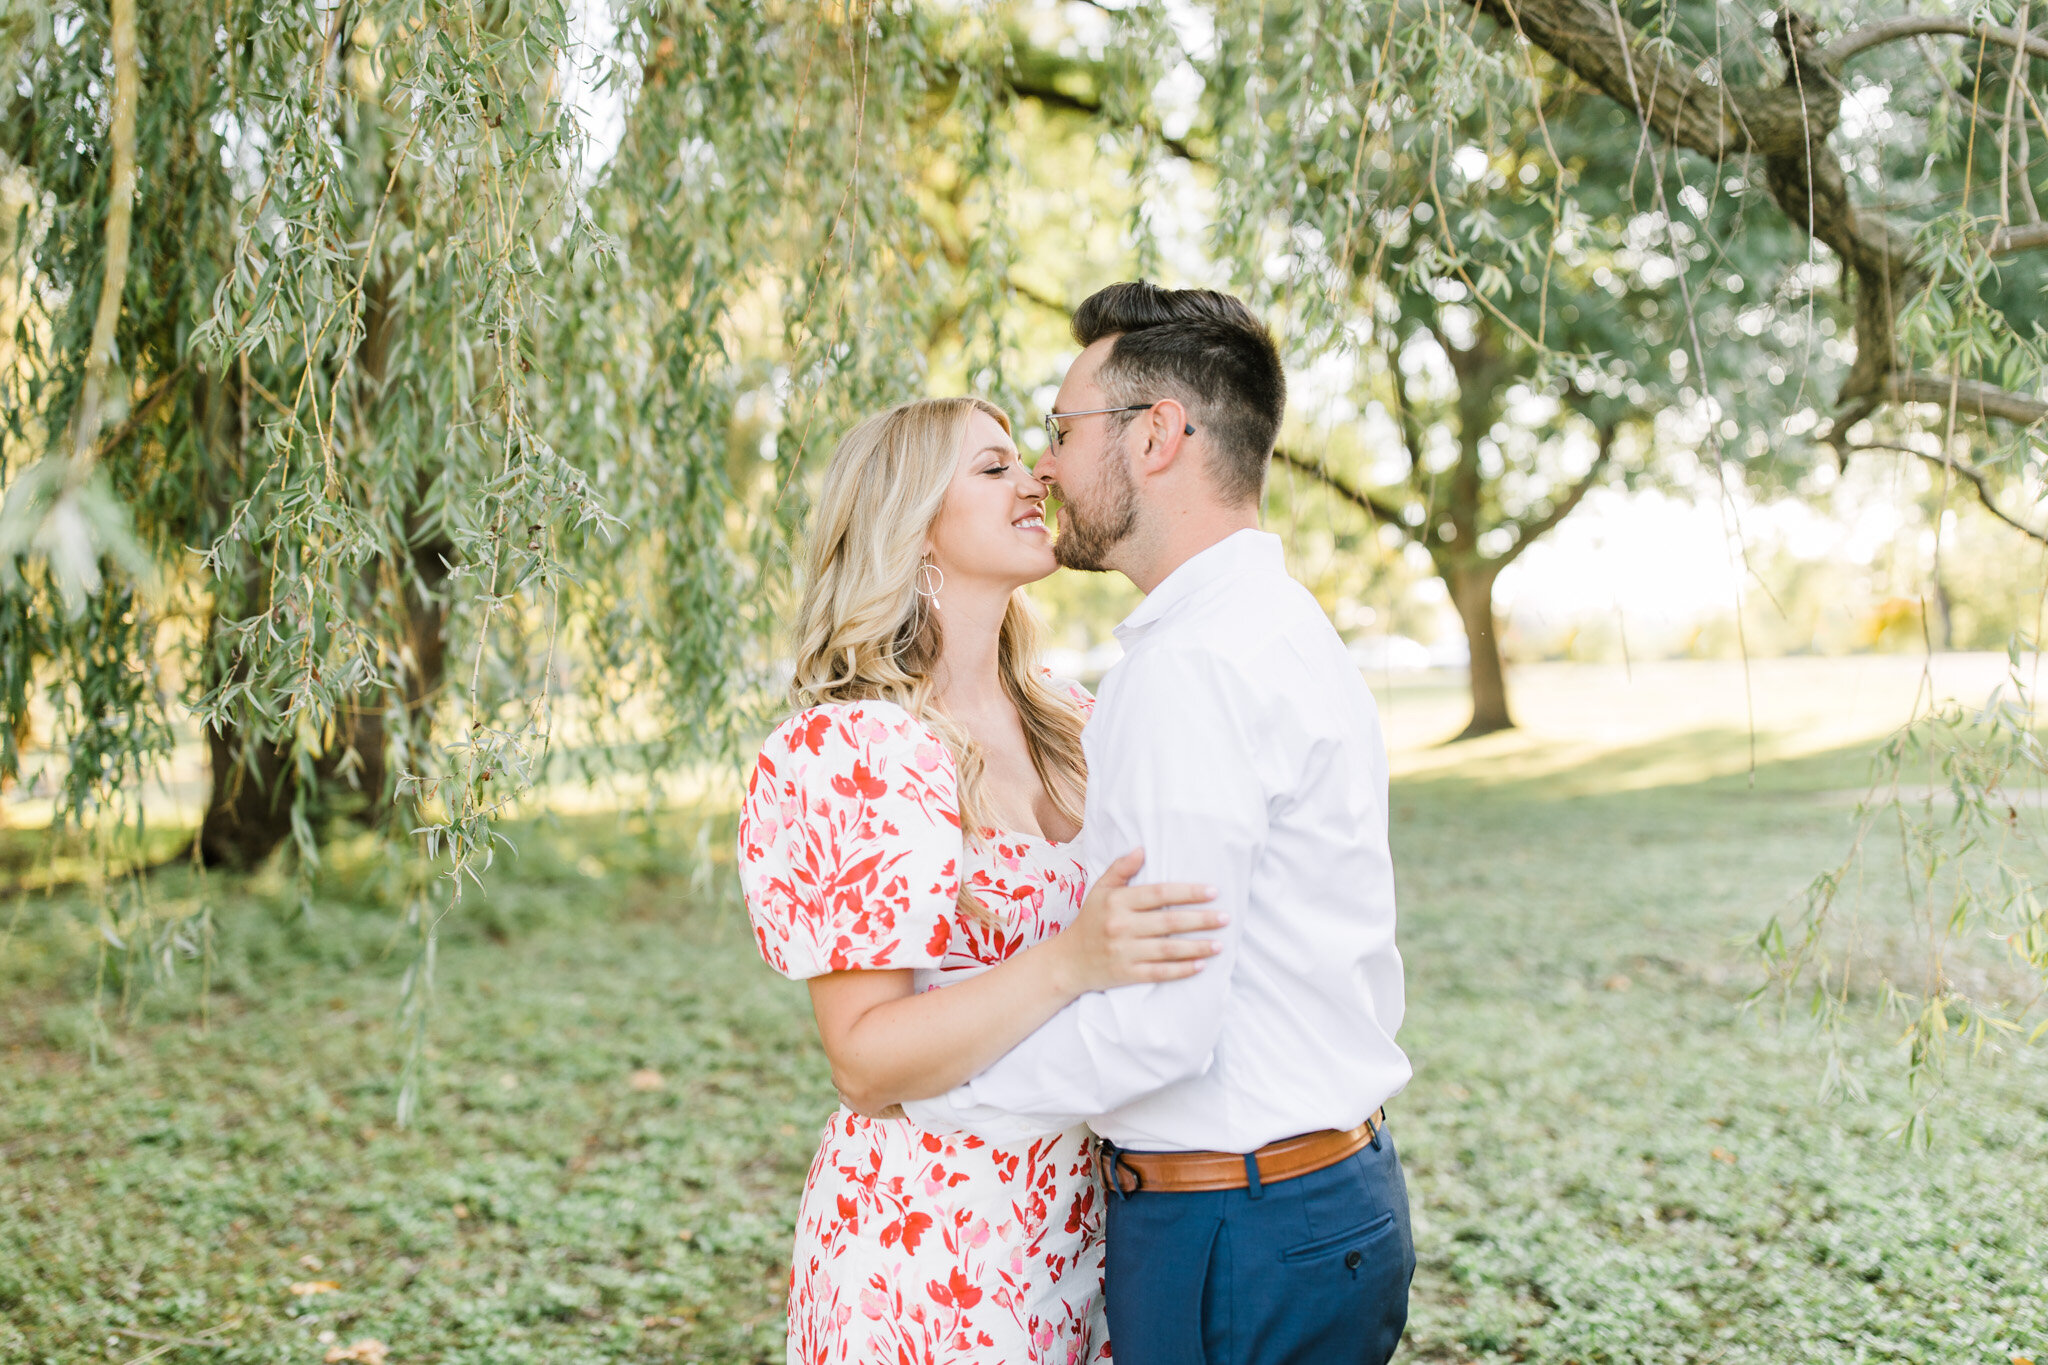 Michigan Summer Engagement at Riverside Park | Engagement Style | Laurenda Marie Photography